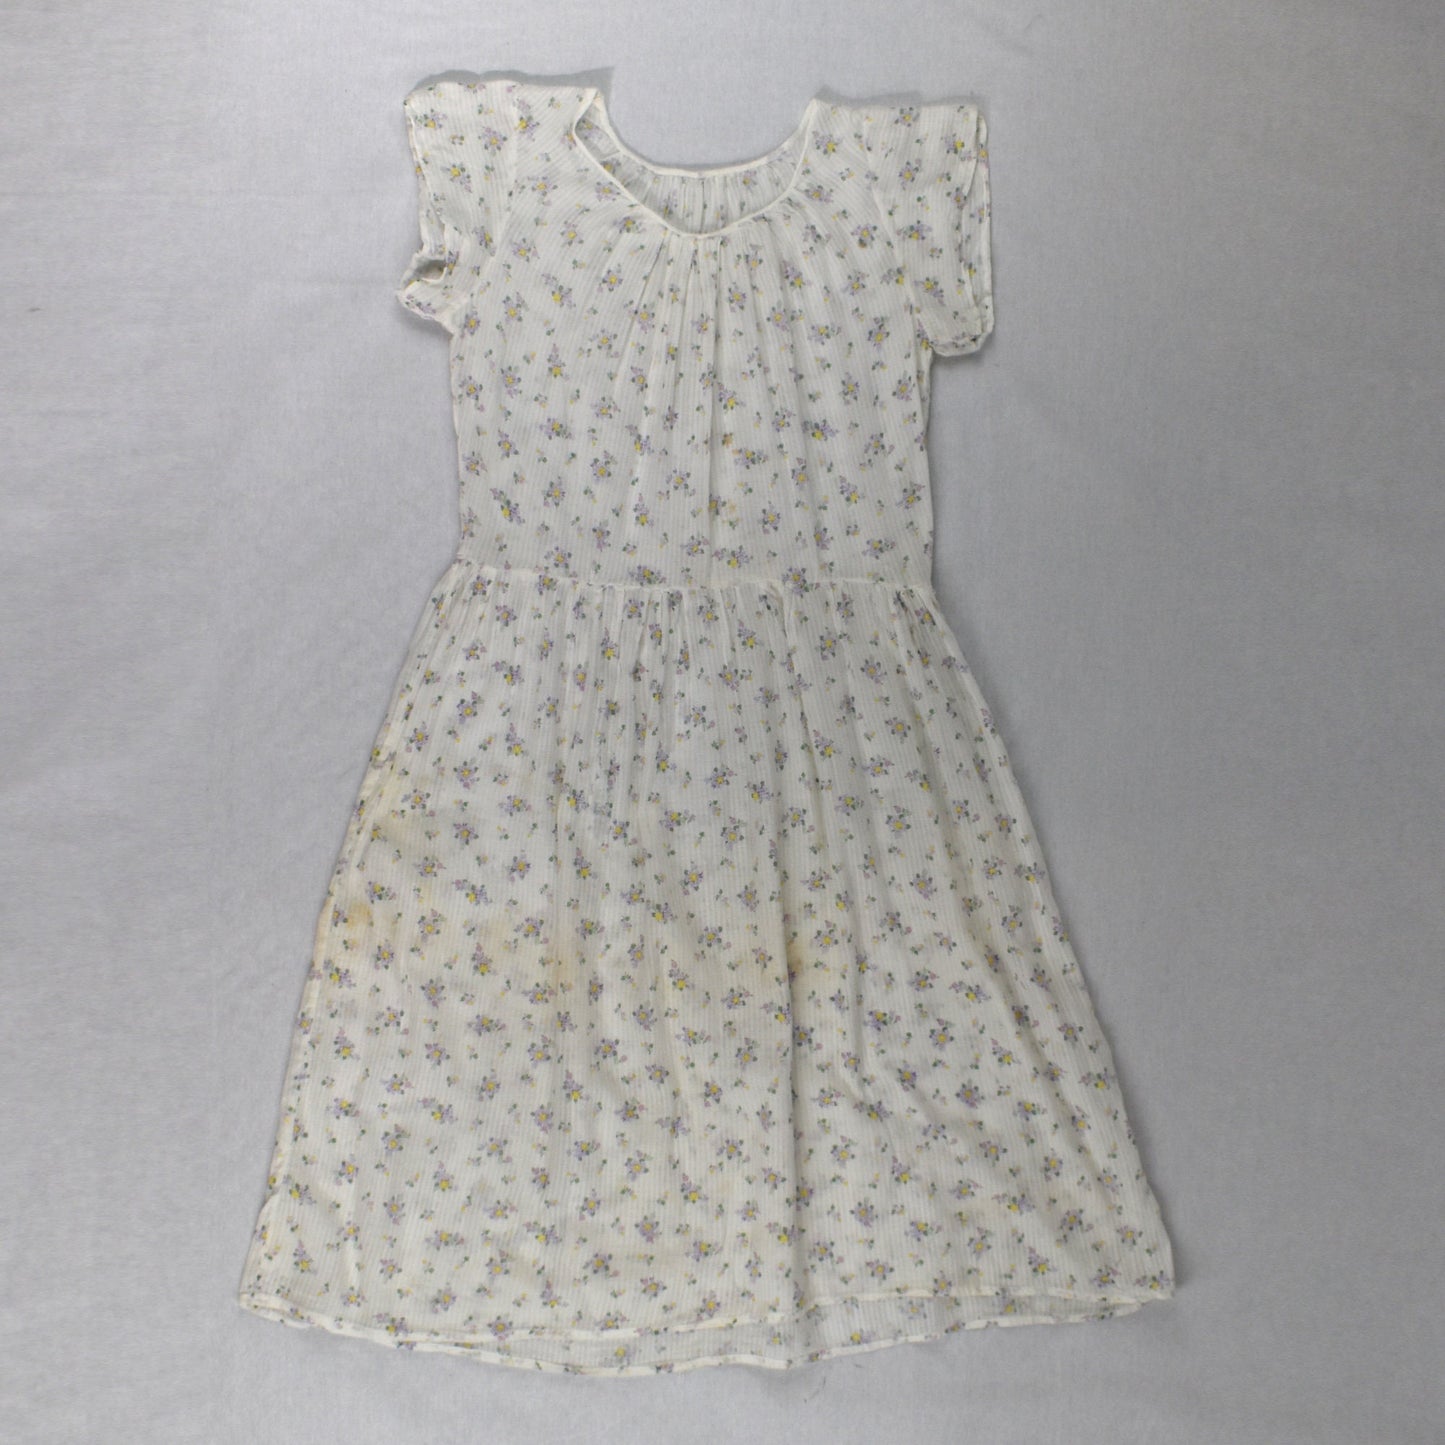 Vintage 1930's Cotton Floral Day Dress